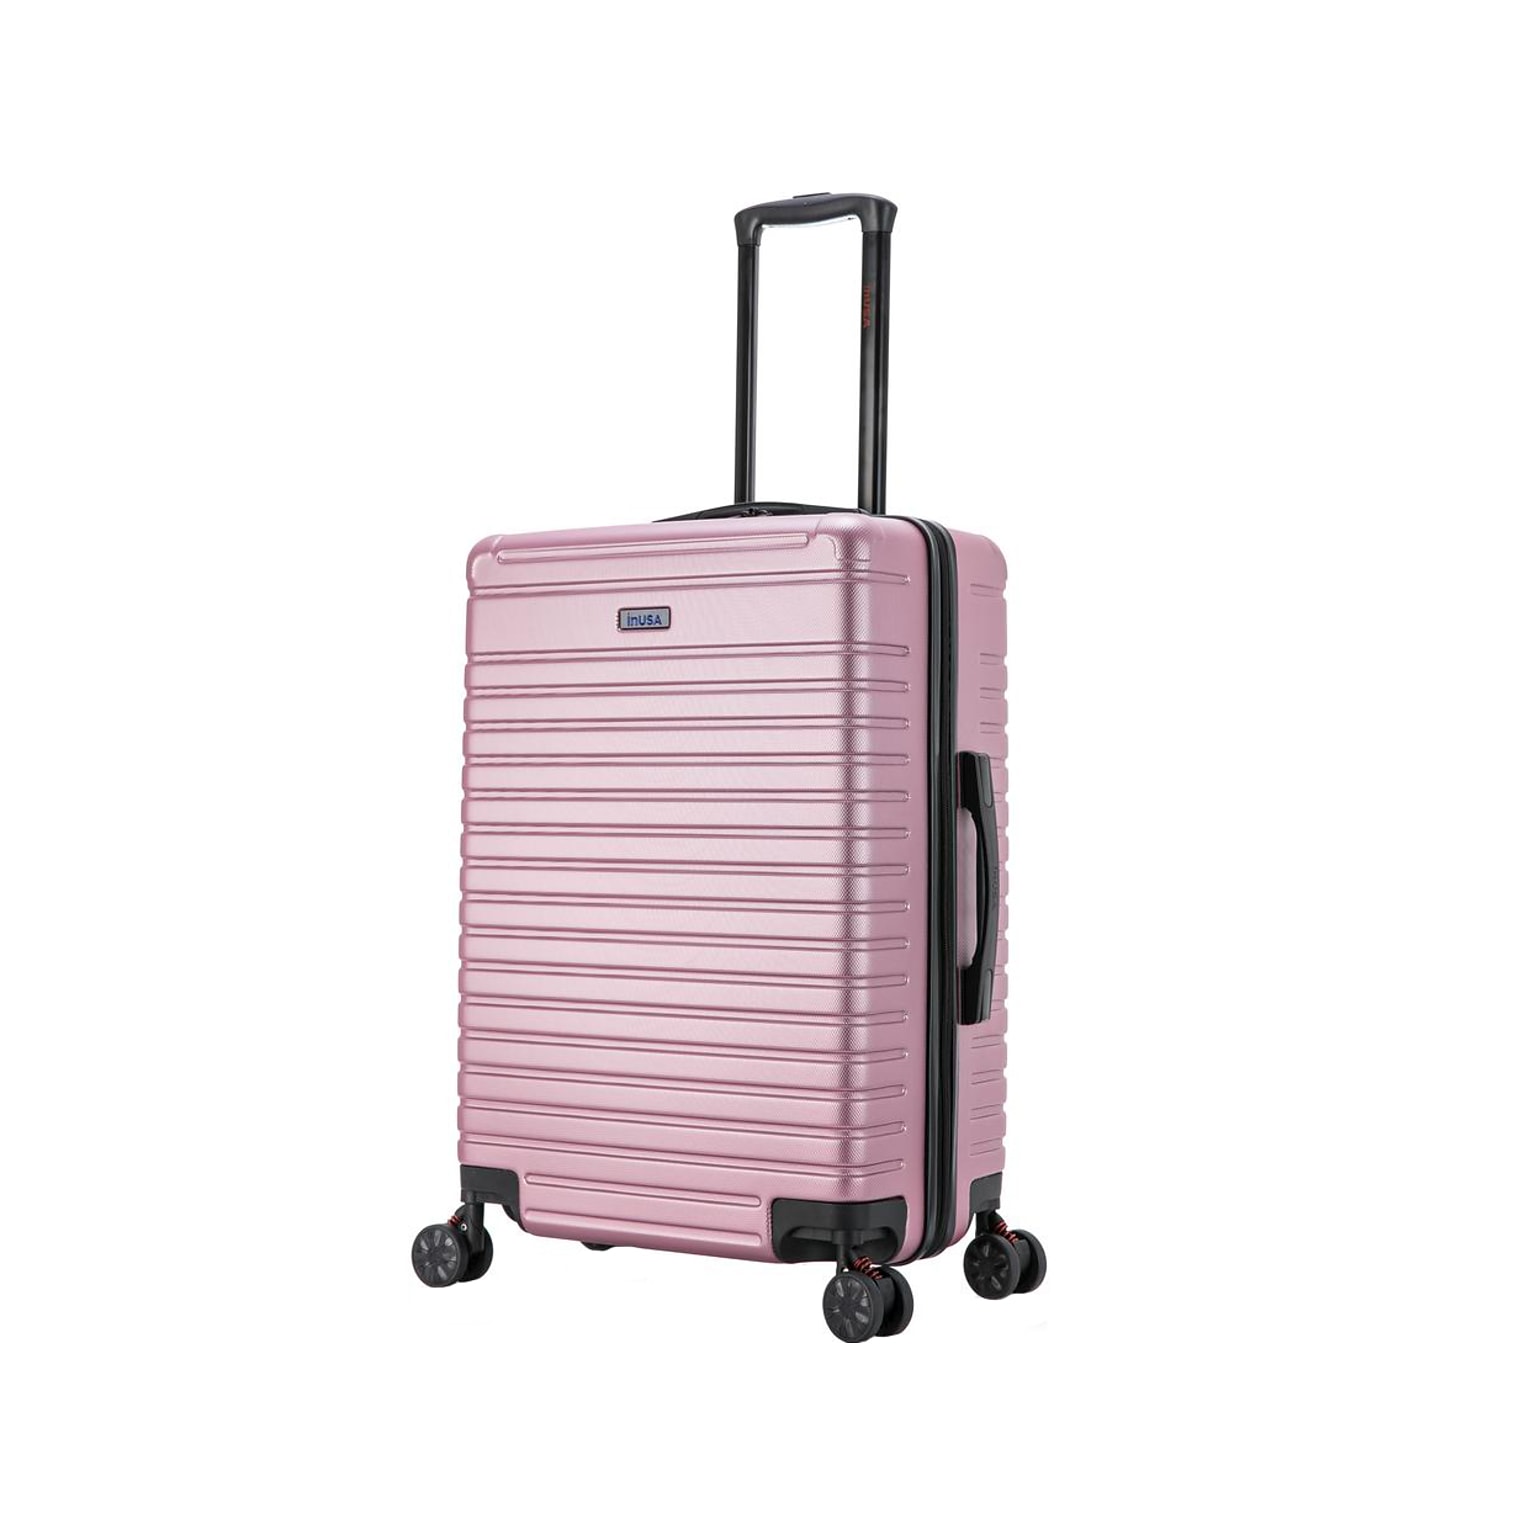 InUSA Deep 25.59 Hardside Suitcase, 4-Wheeled Spinner, Rose Gold (IUDEE00M-ROS)